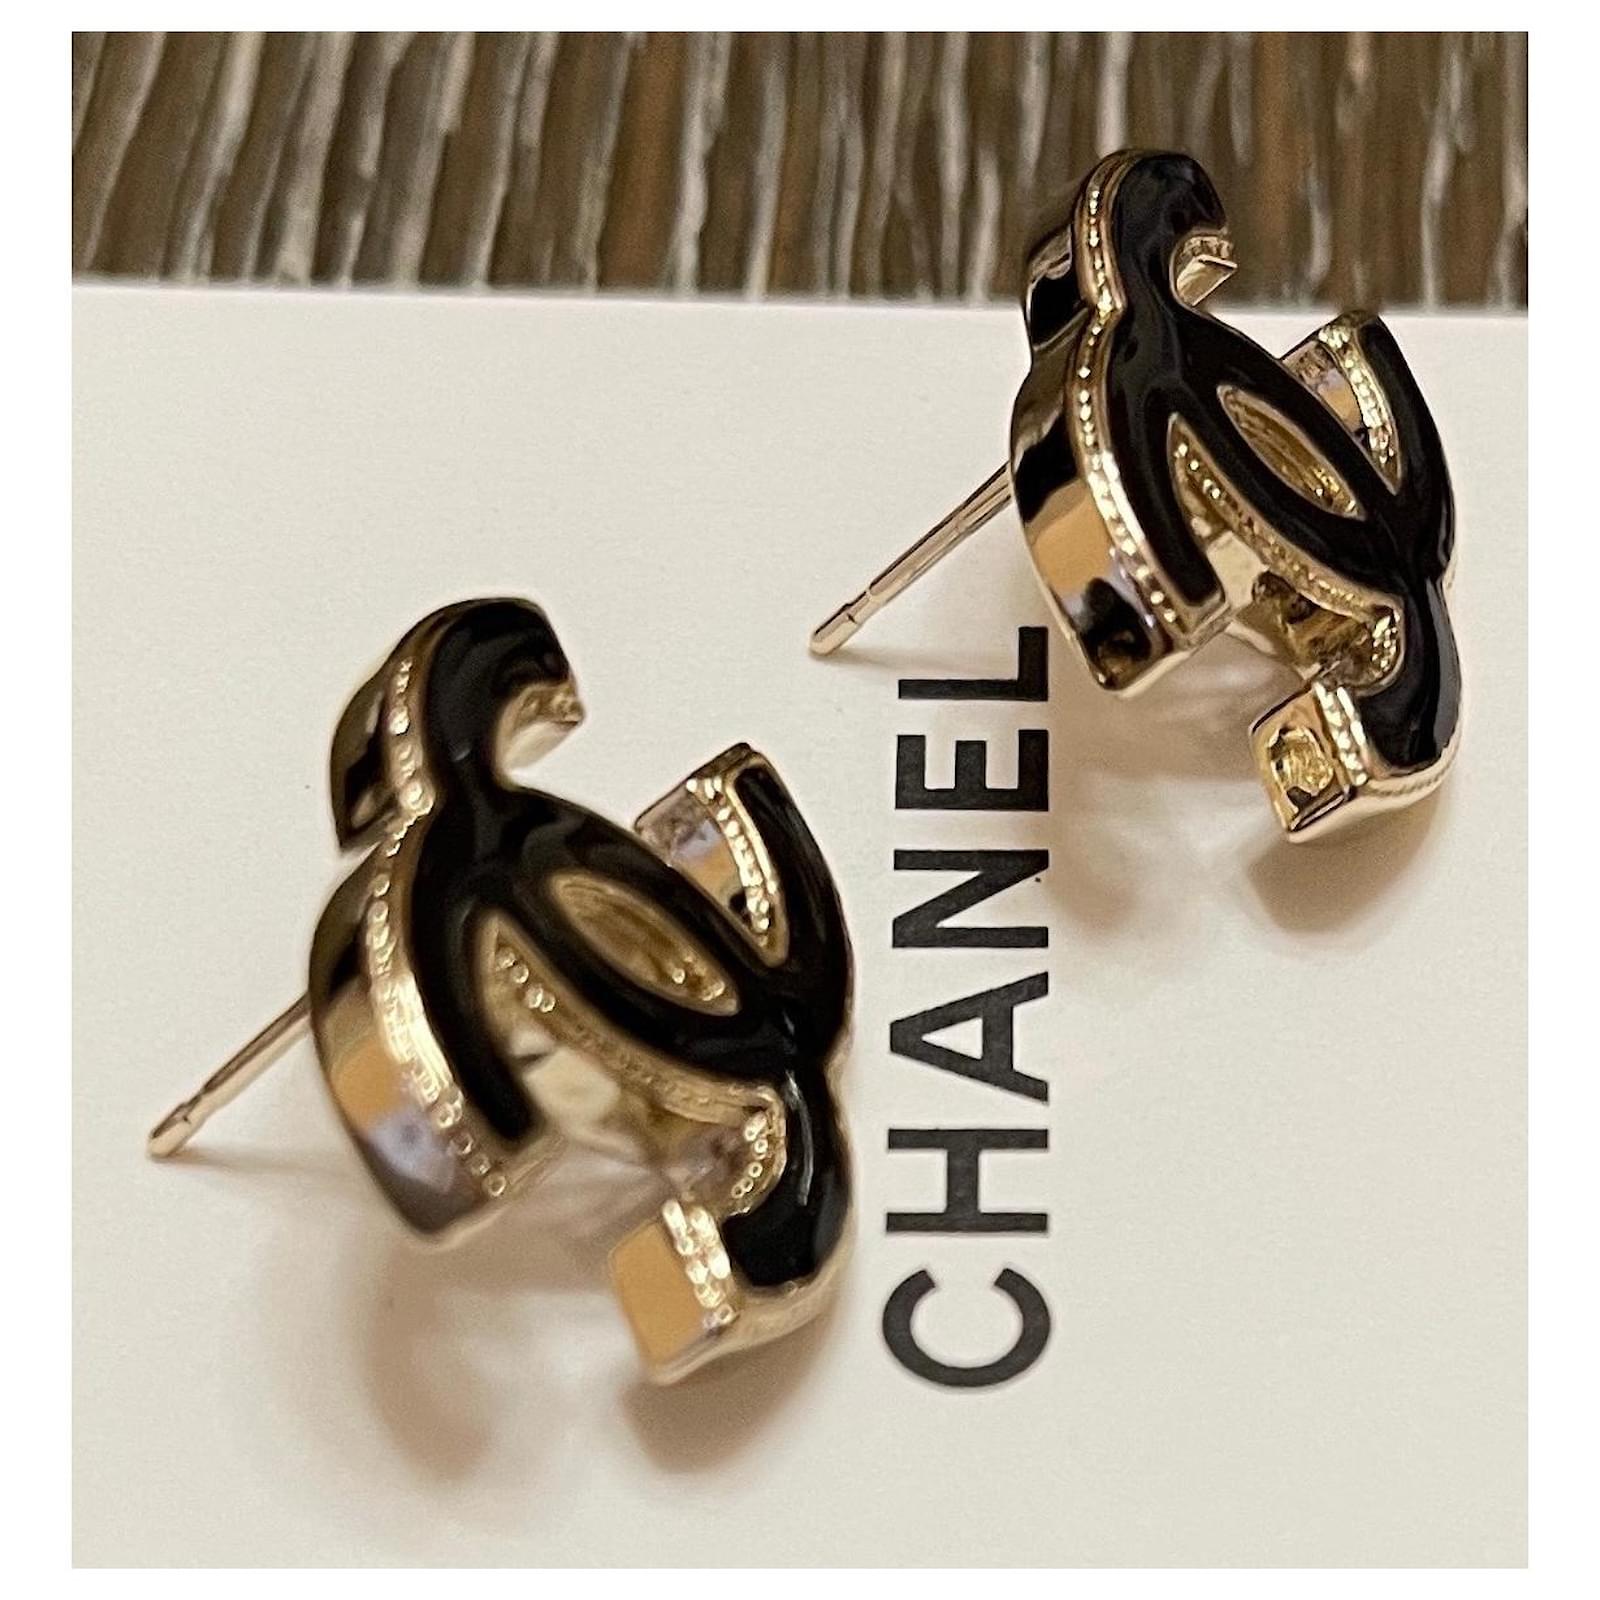 Chanel Interlocking Earrings Black/Gold in Metal - US